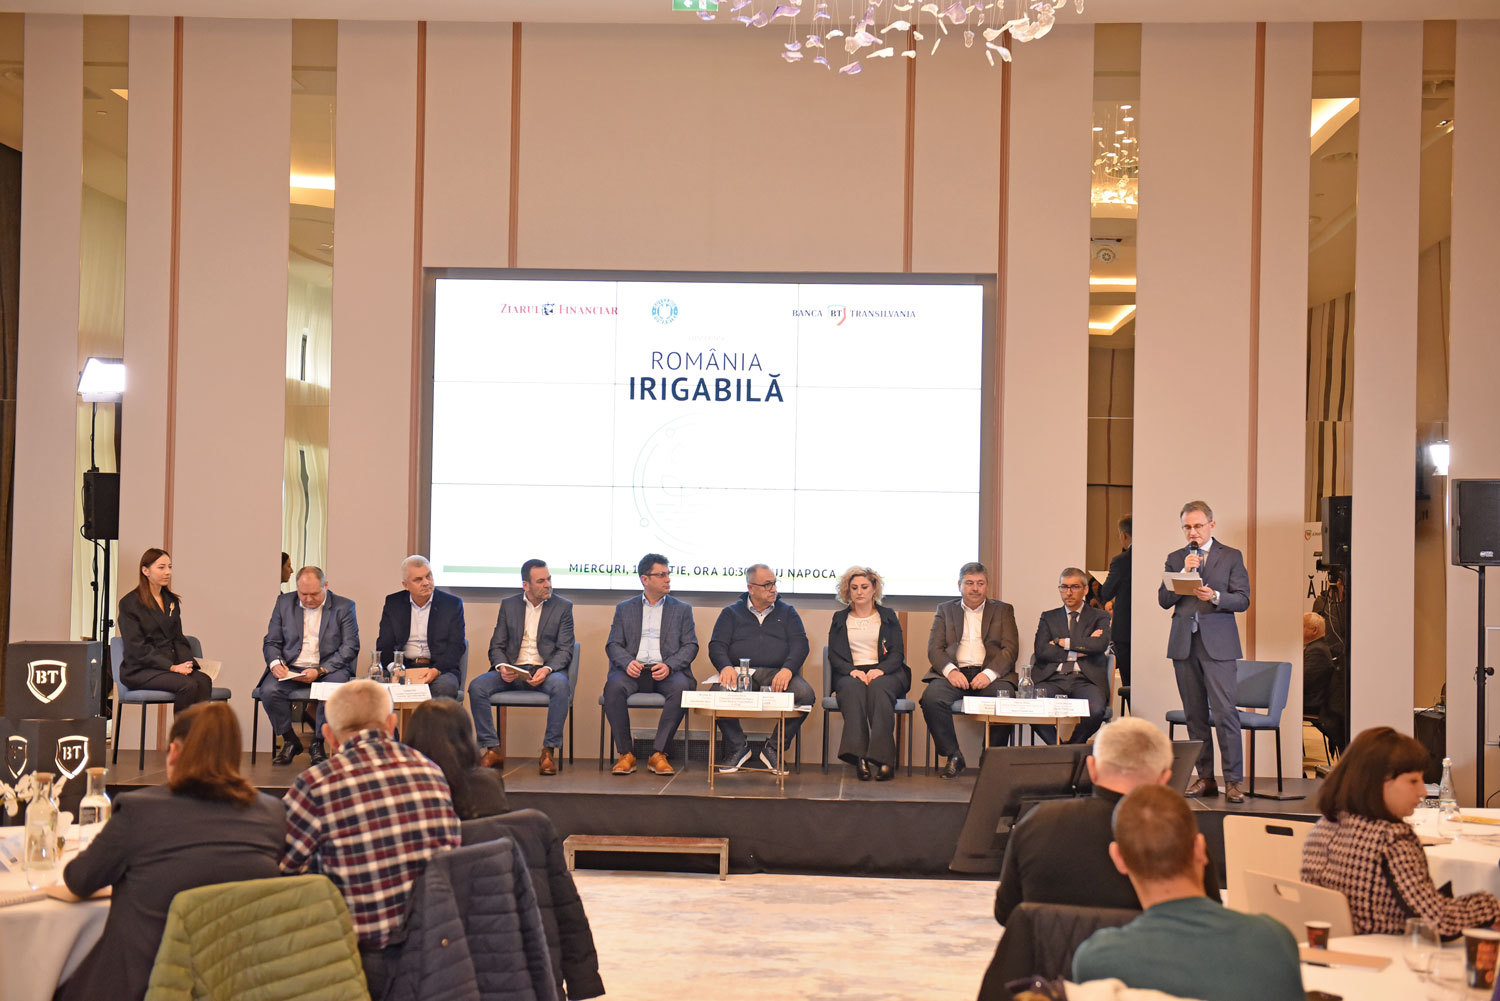 Conferinta-Romania-Irigabila-organizata-de-BT-si-Ziarul-Financiar-Newsroom.png